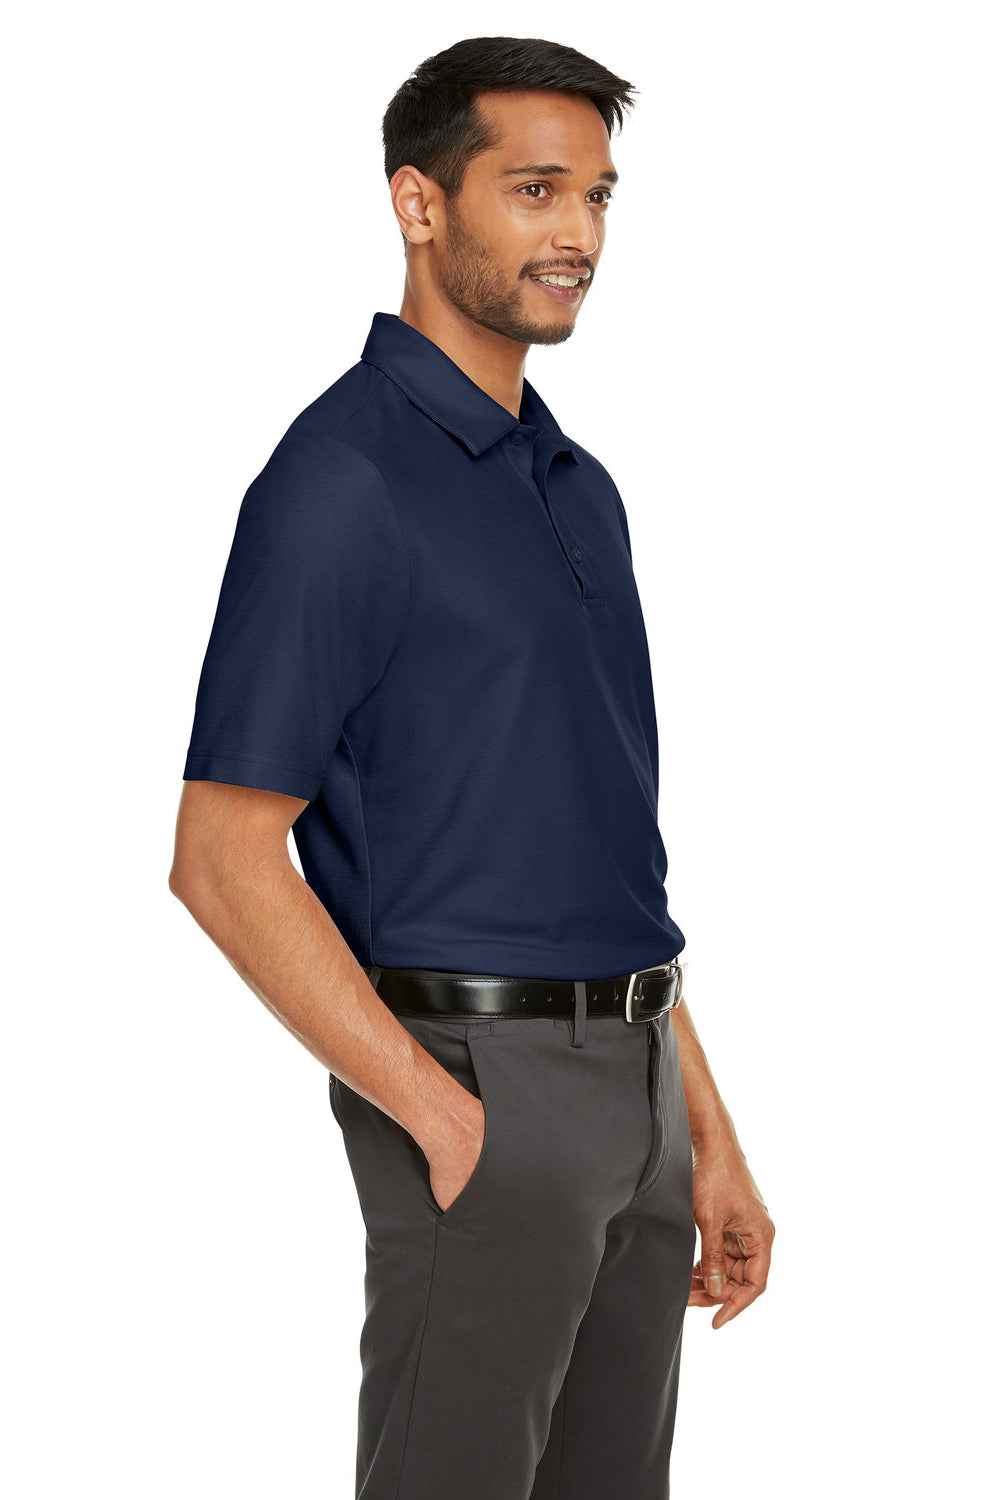 Core 365 CE112 Mens Fusion ChromaSoft Performance Moisture Wicking Short Sleeve Polo Shirt Classic Navy Blue 3Q